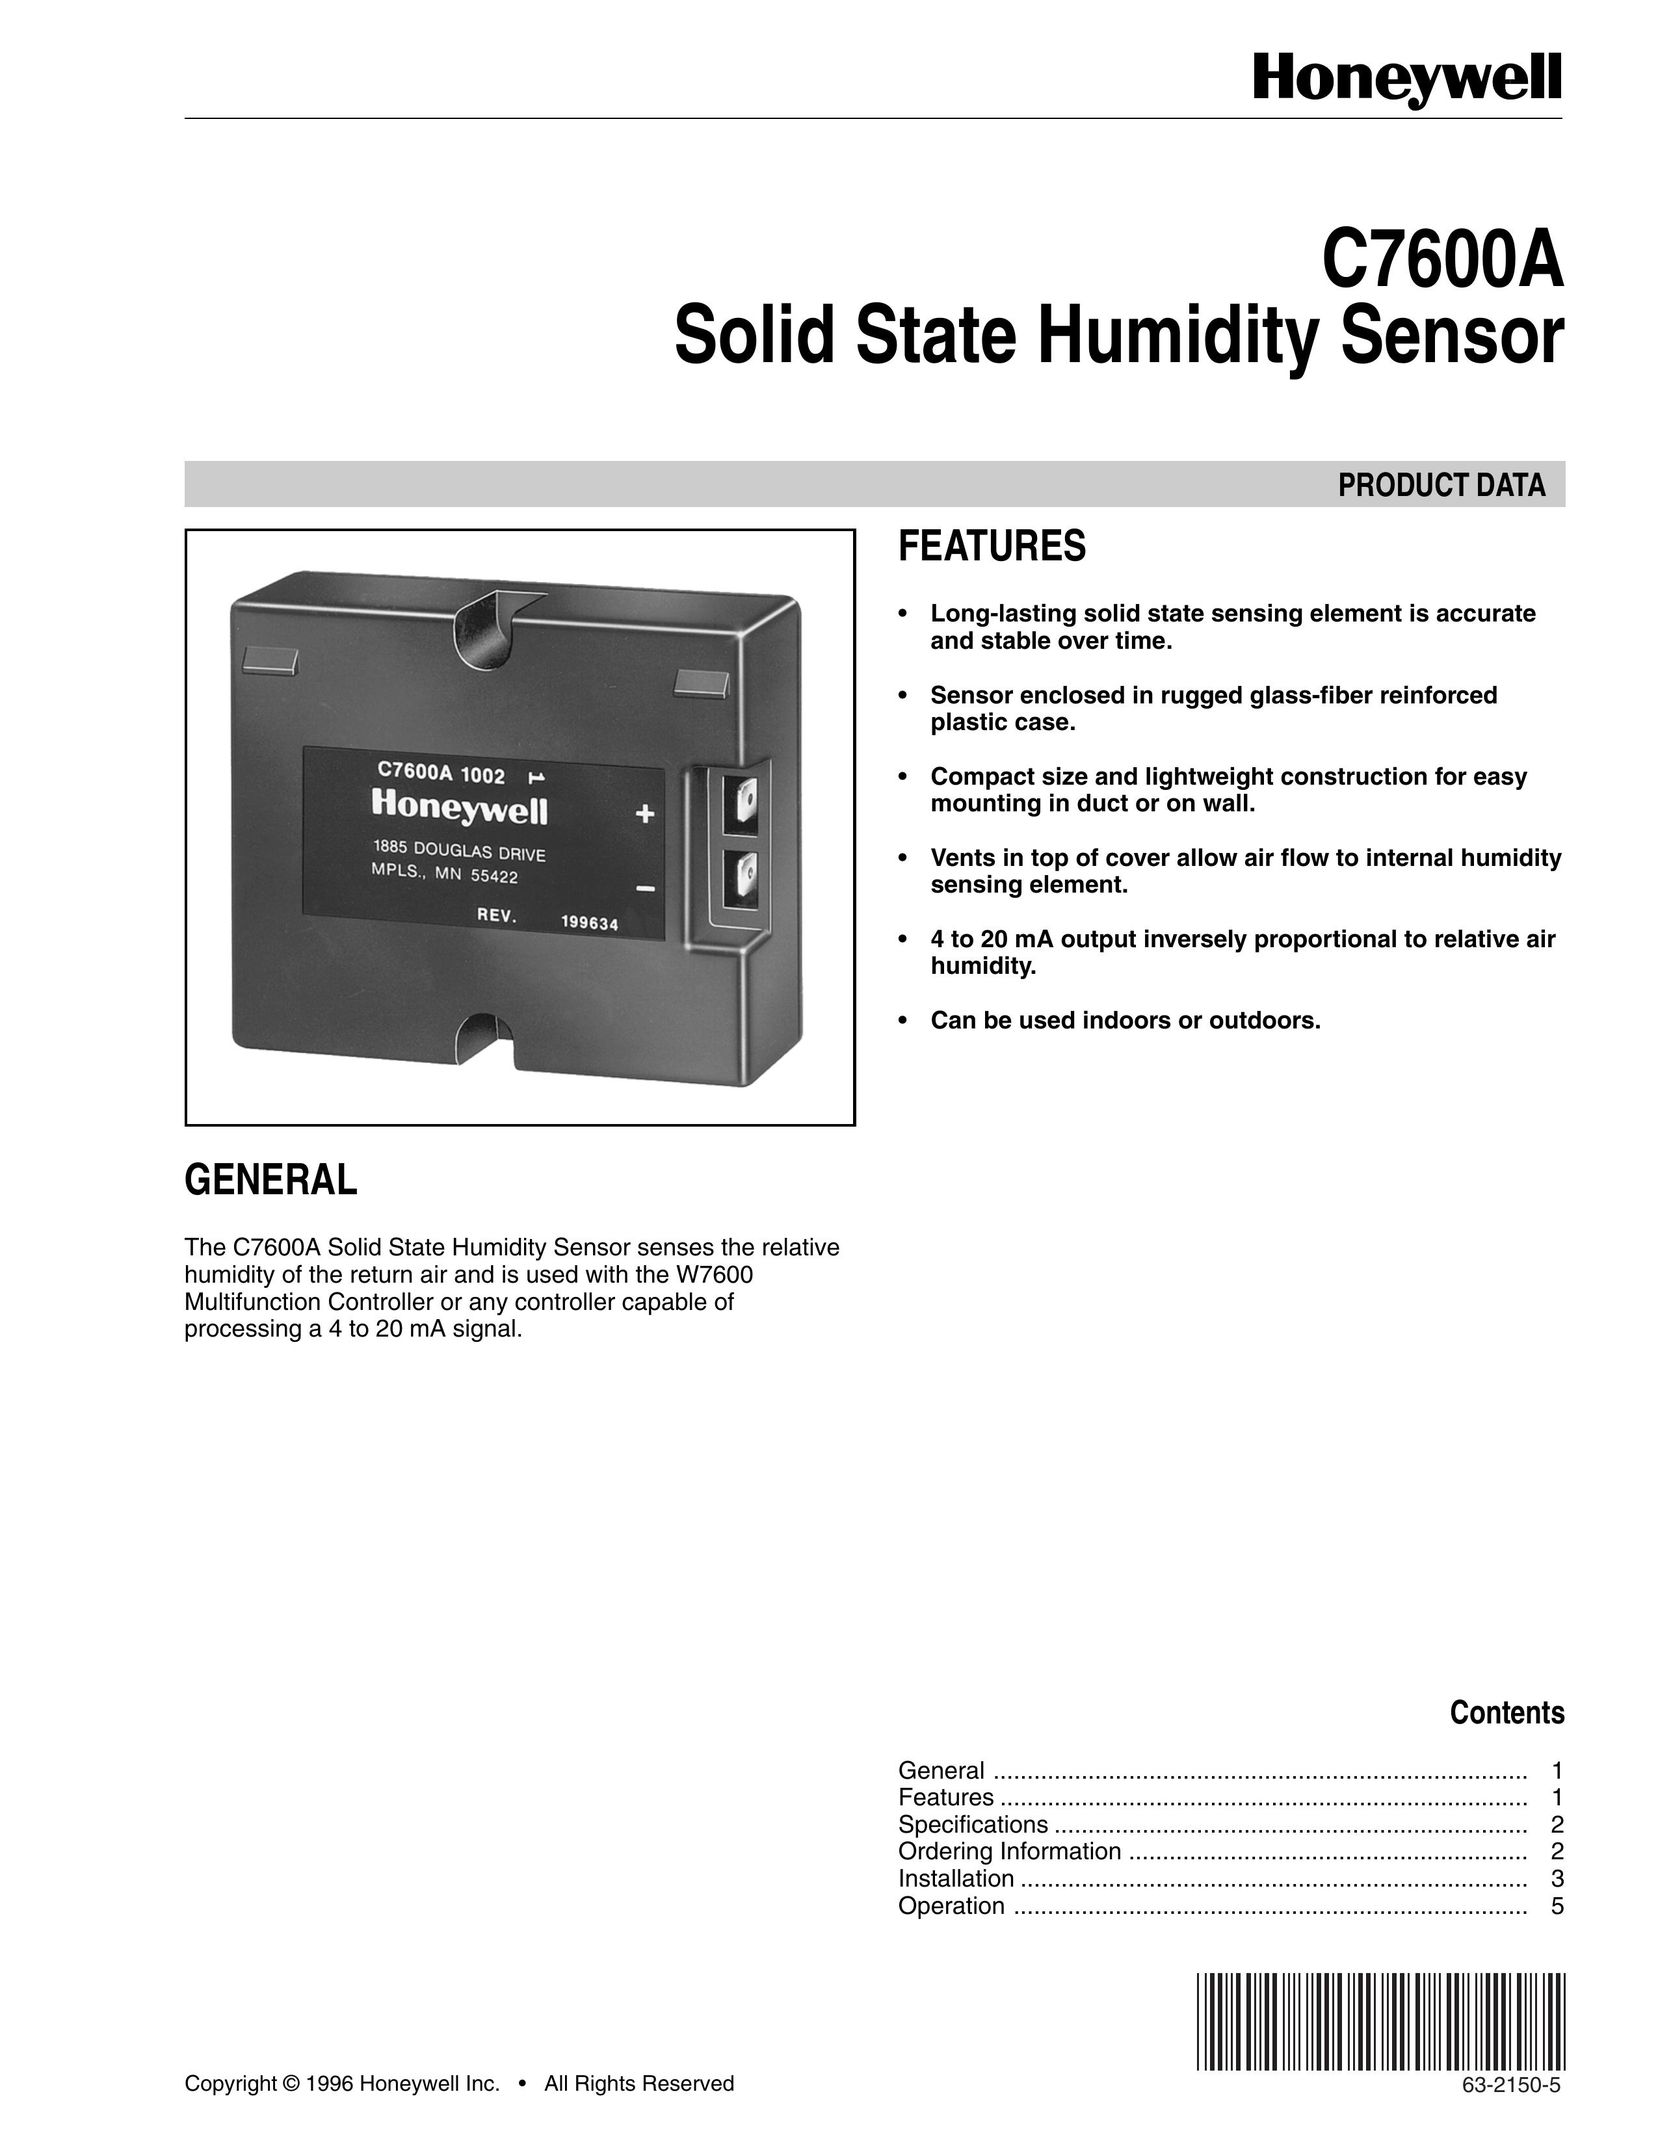 Honeywell C7600A Stud Sensor User Manual